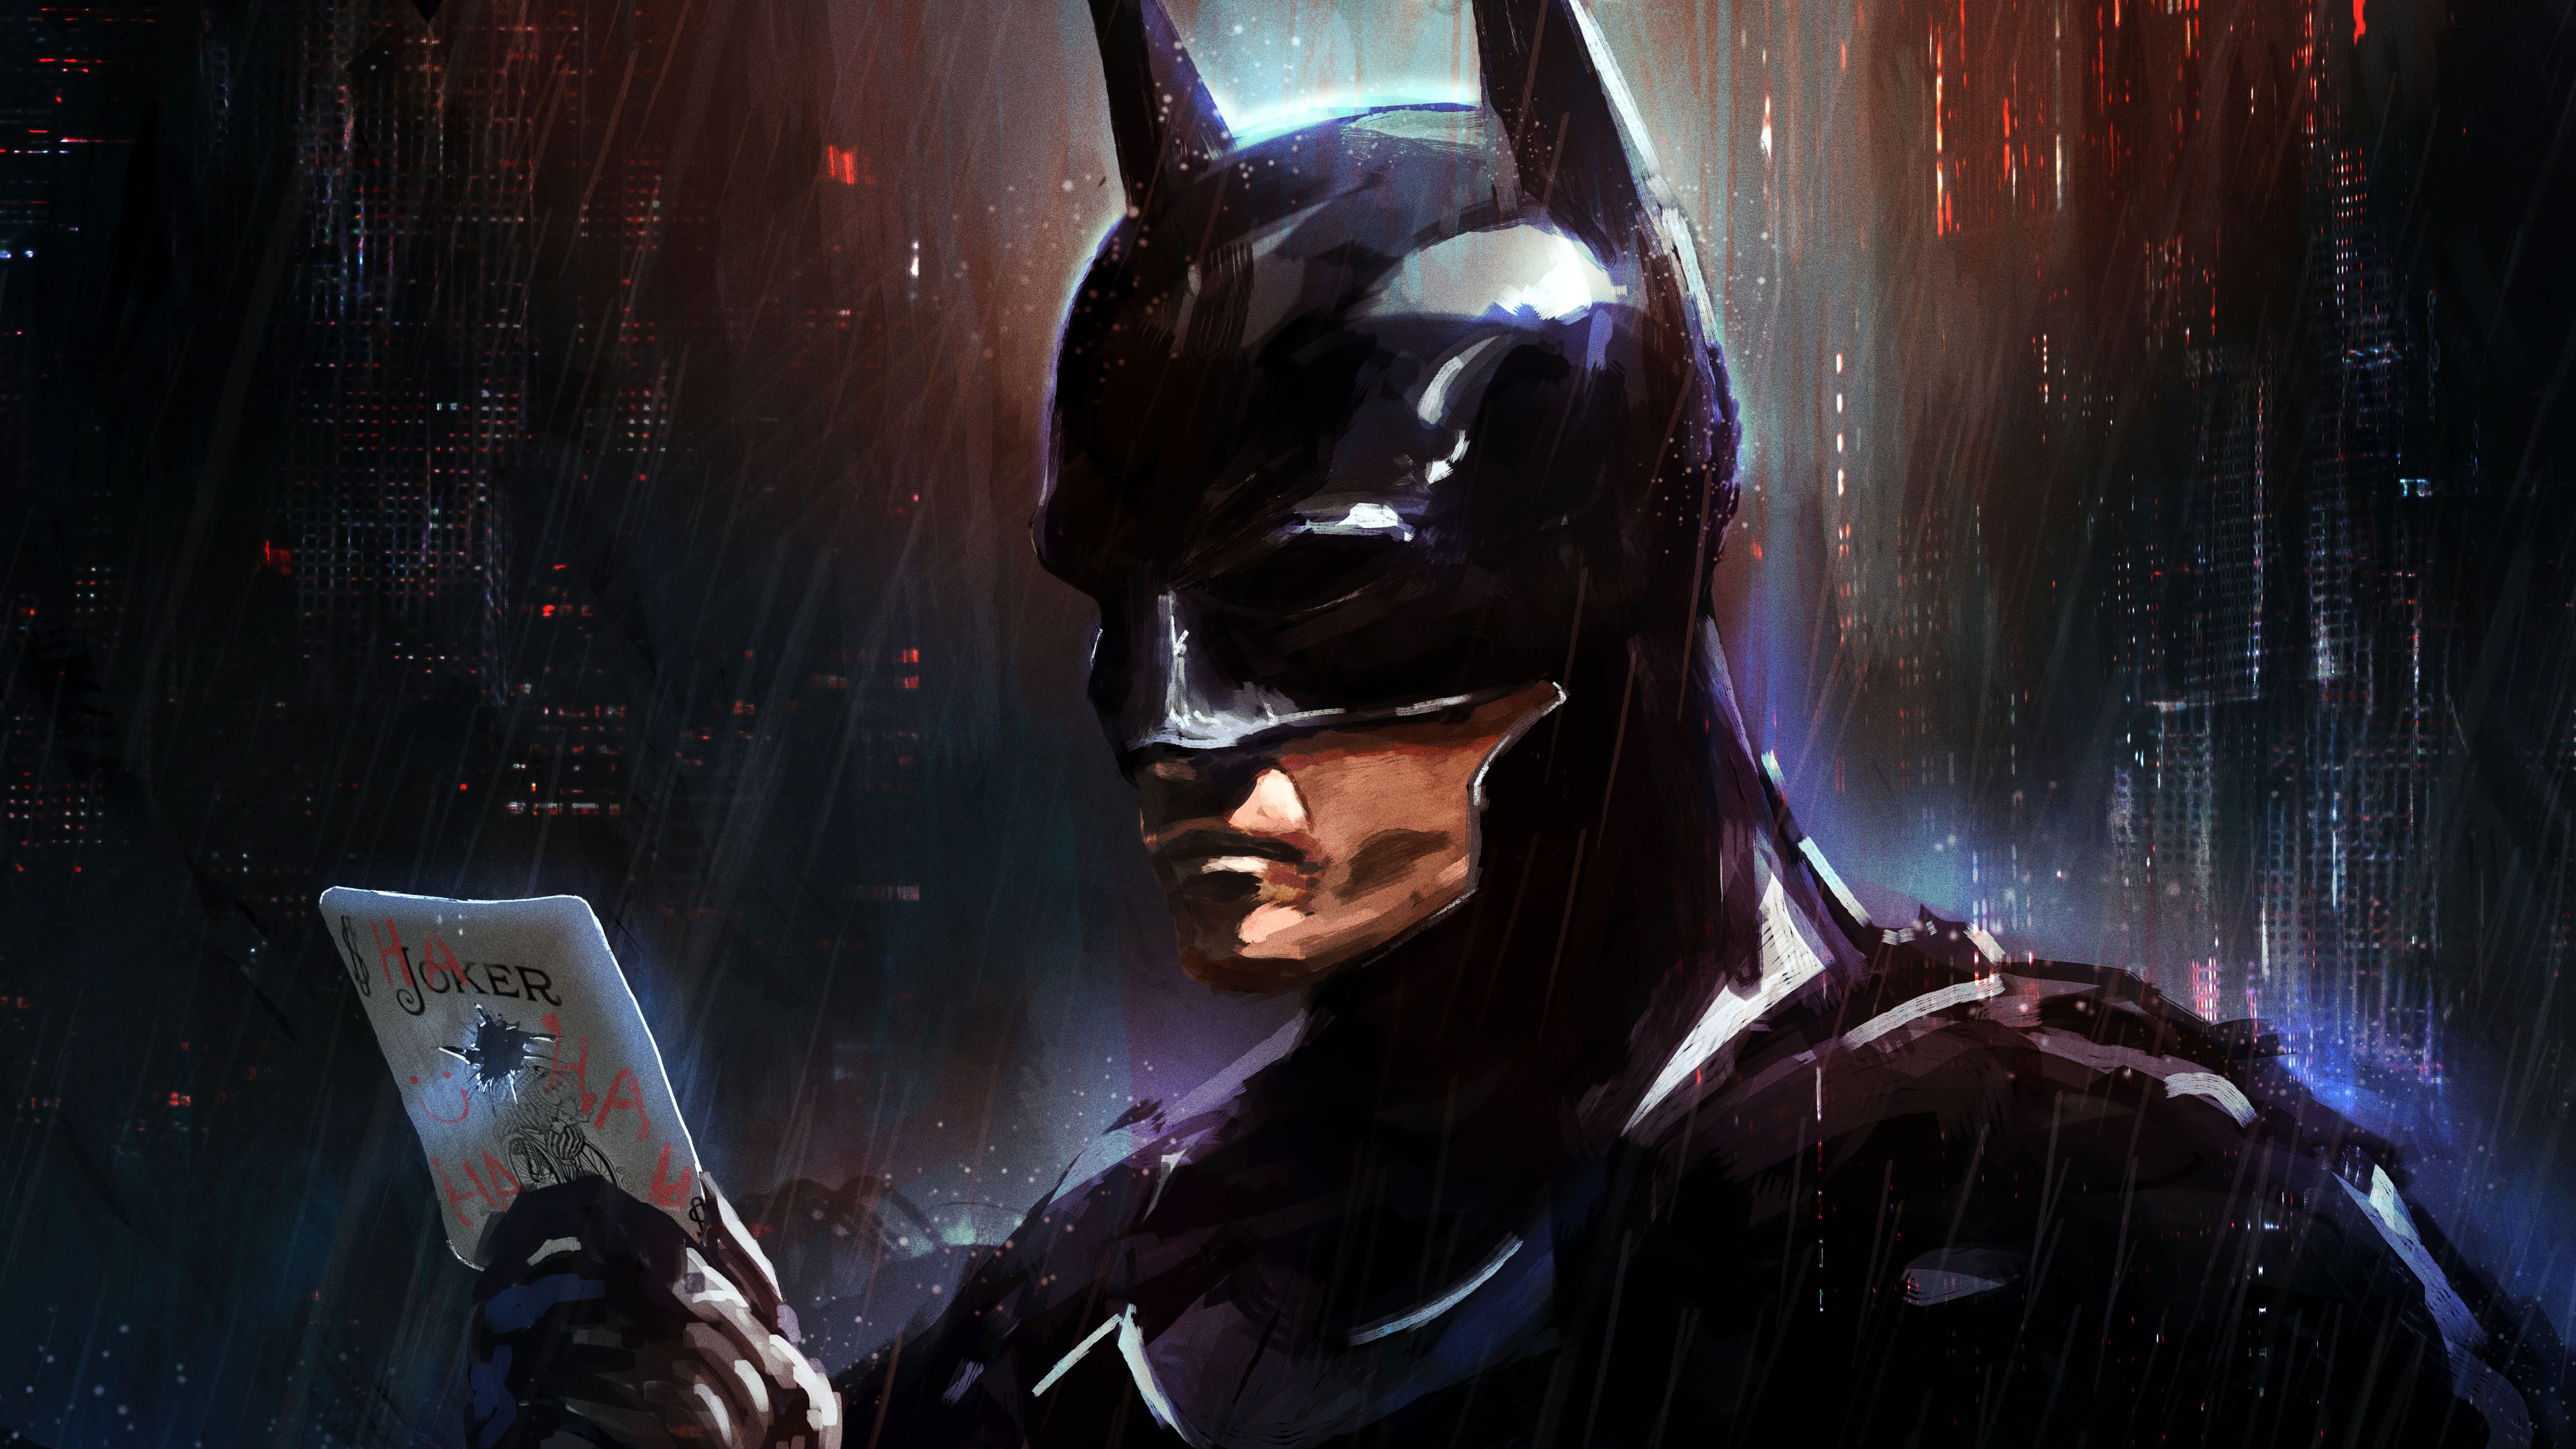 Descarga gratuita de fondo de pantalla para móvil de Historietas, The Batman, Dc Comics.